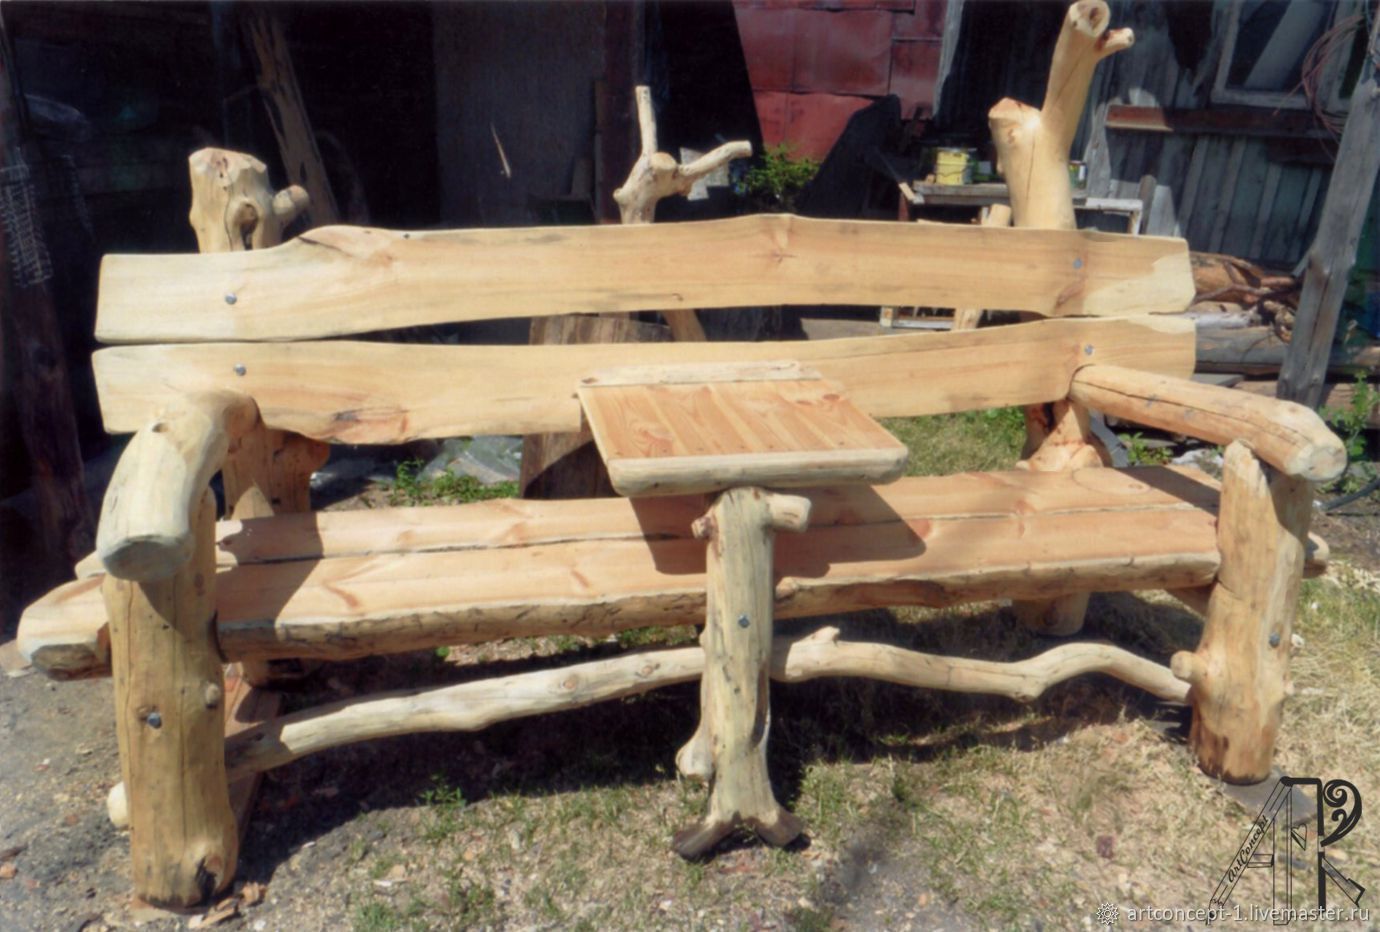 Ceramic Outdoor Fireplace Fresh Garden Bench Made Of solid Pine and Snags with A Table – Ð·Ð°ÐºÐ°Ð·Ð°ÑÑ Ð½Ð° Ð¯ÑÐ¼Ð°ÑÐºÐµ ÐÐ°ÑÑÐµÑÐ¾Ð² – Izny3